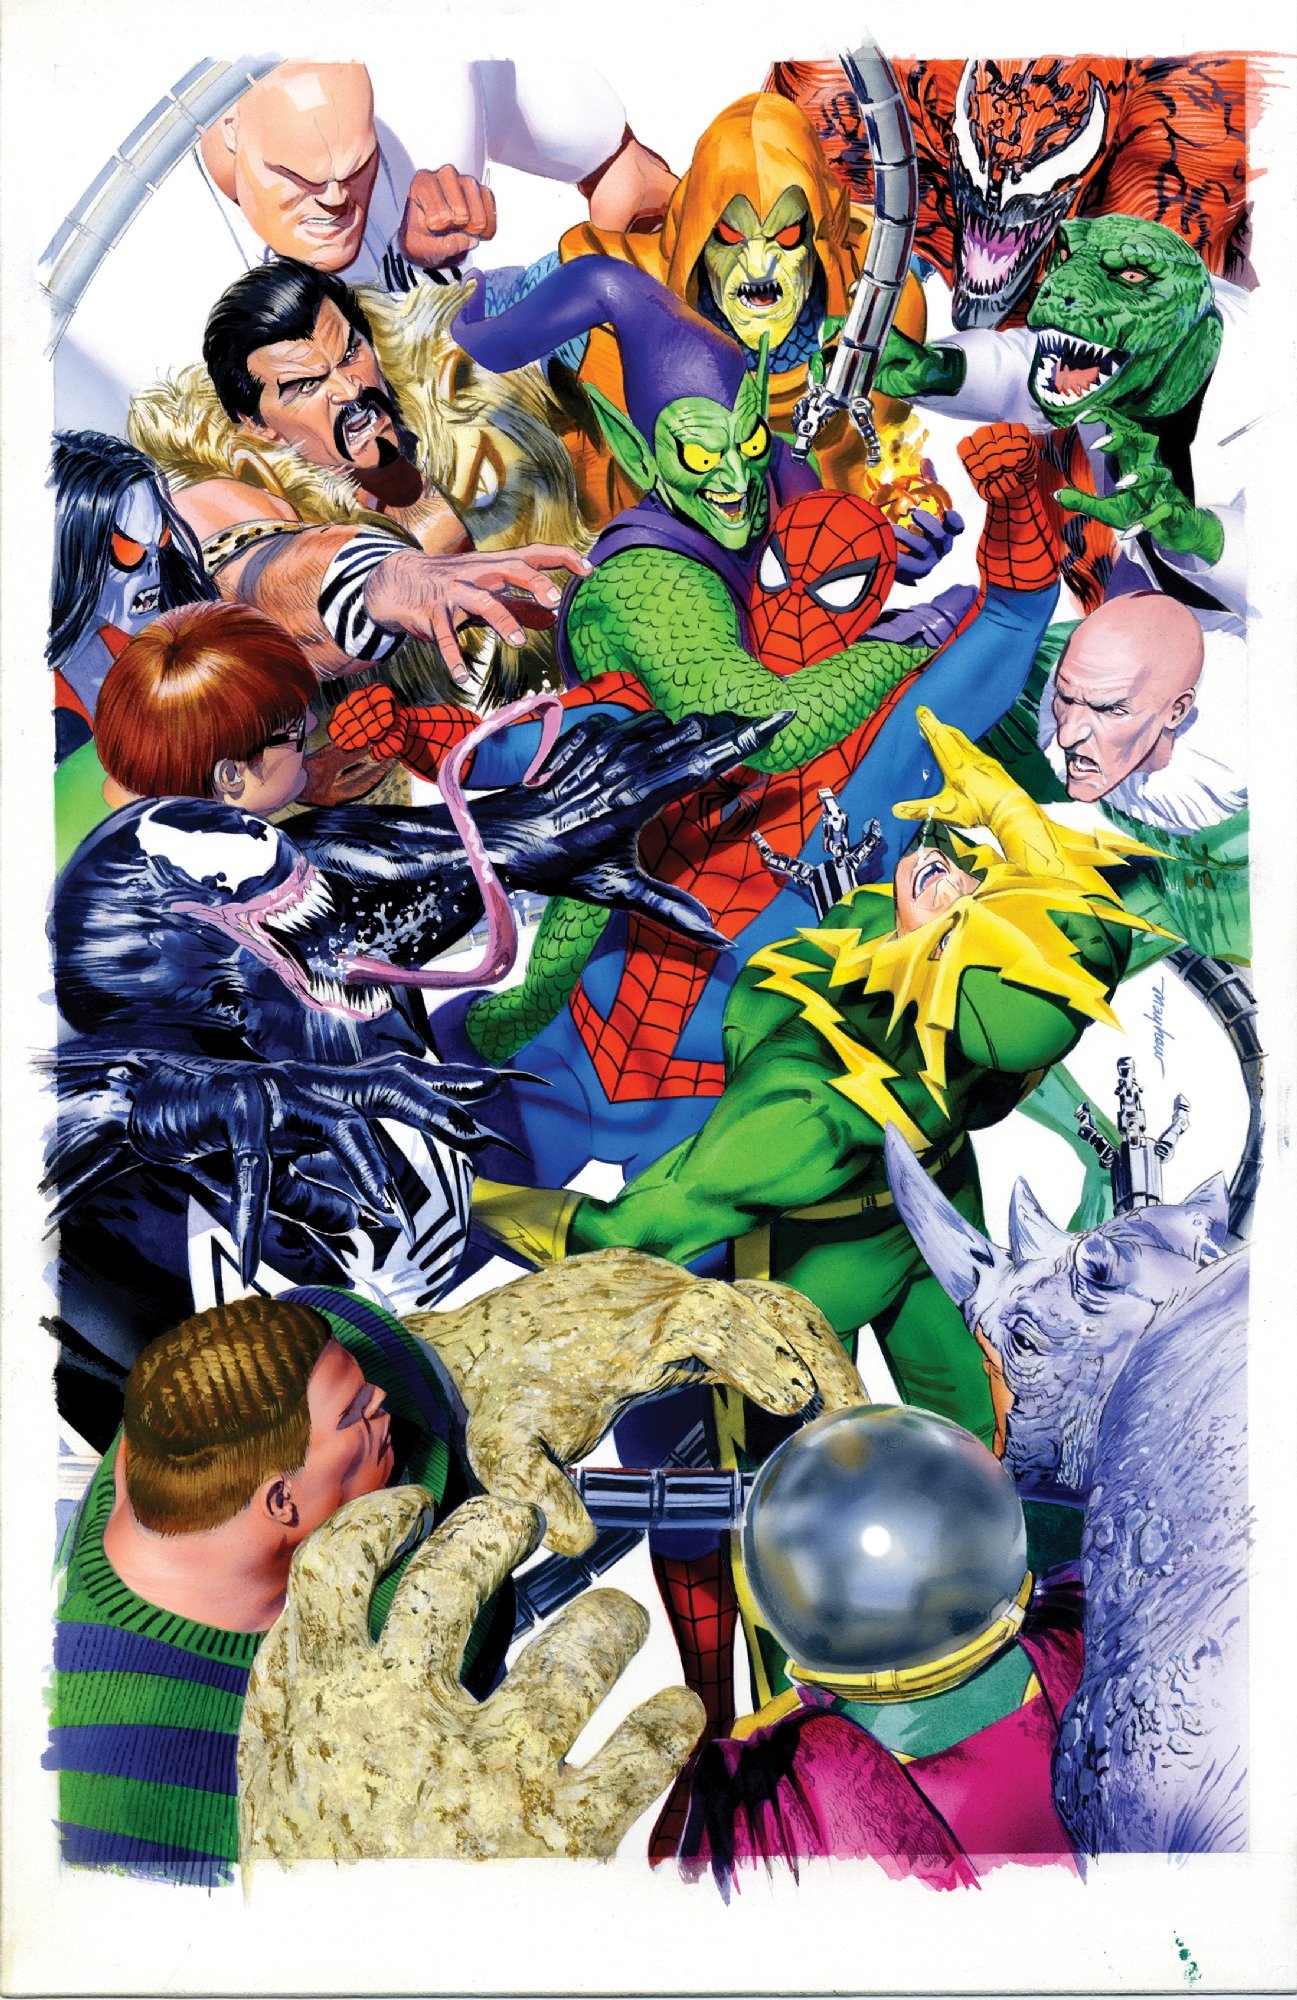 AMAZING SPIDER-MAN #1 (2022) Mike Mayhew Studio Variant